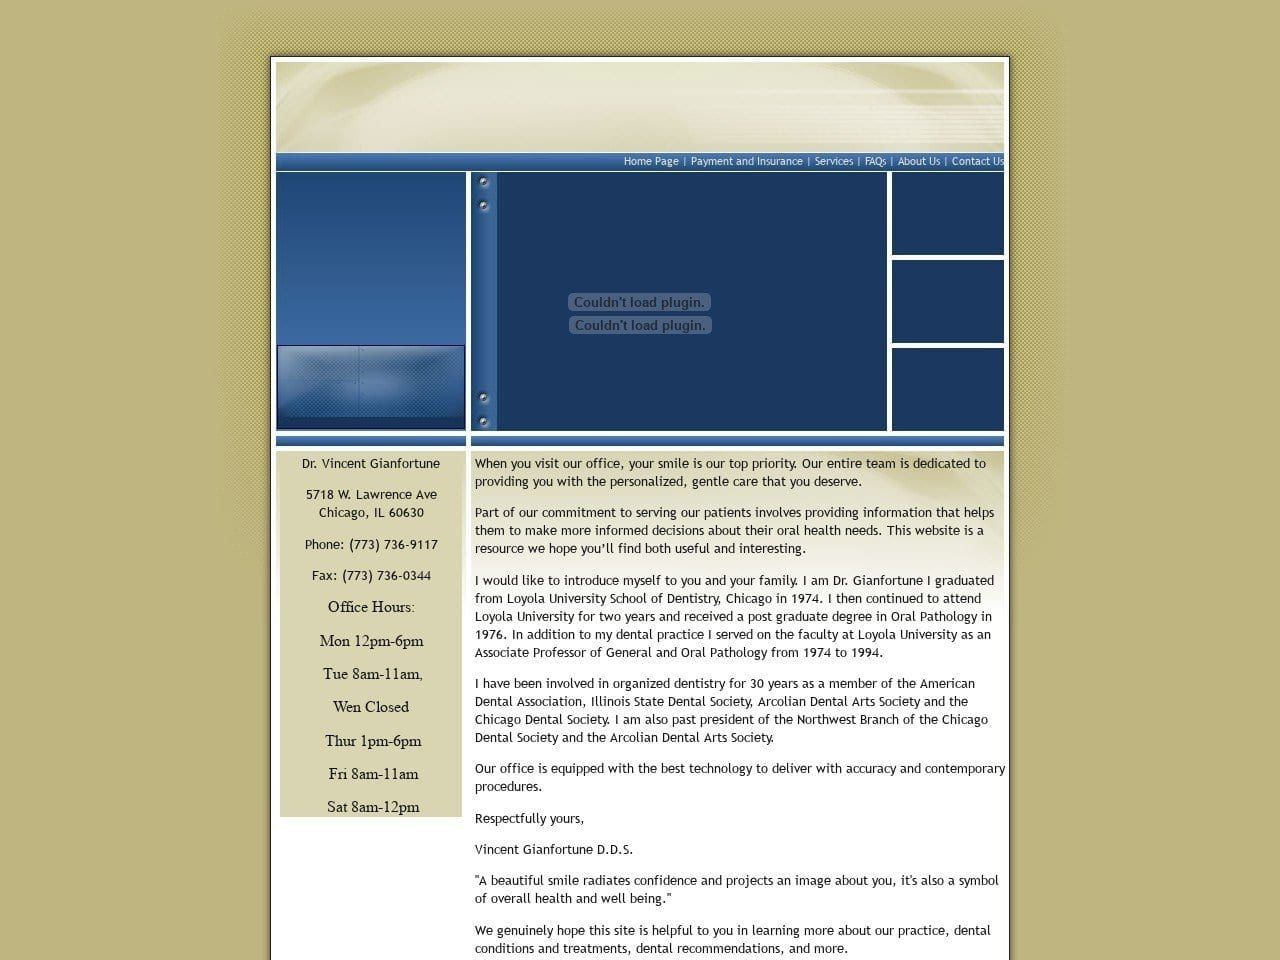 Gianfortune Vincent DDS Website Screenshot from vincentgianfortunedds.com